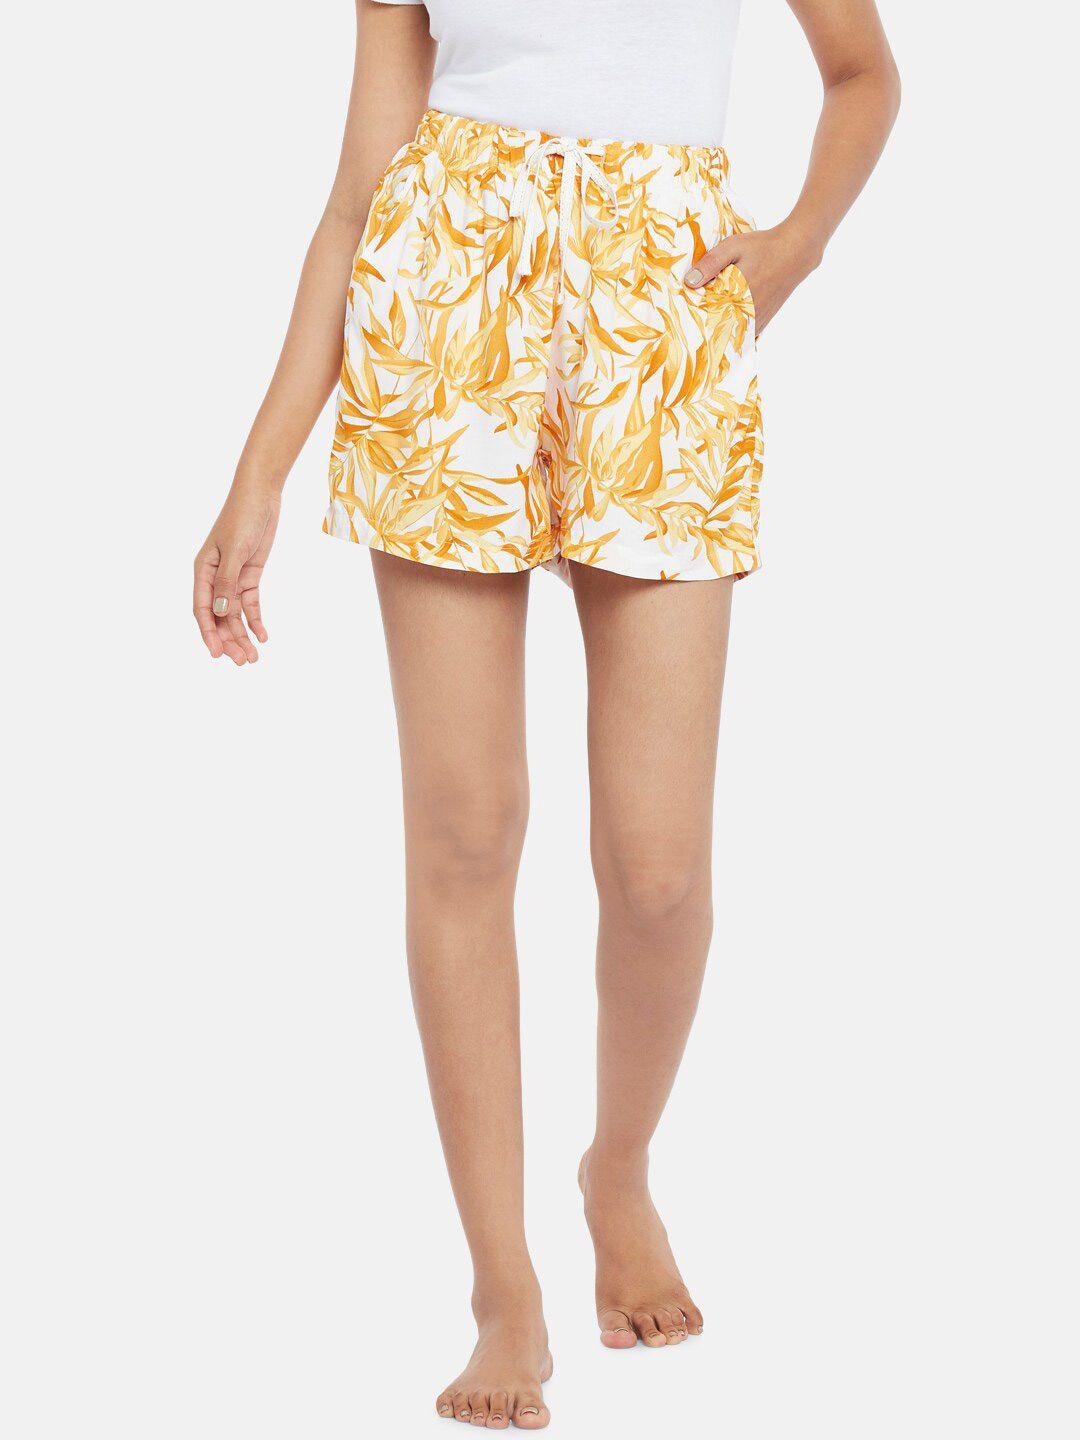 dreamz-by-pantaloons-women-orange-&-white-printed-lounge-shorts